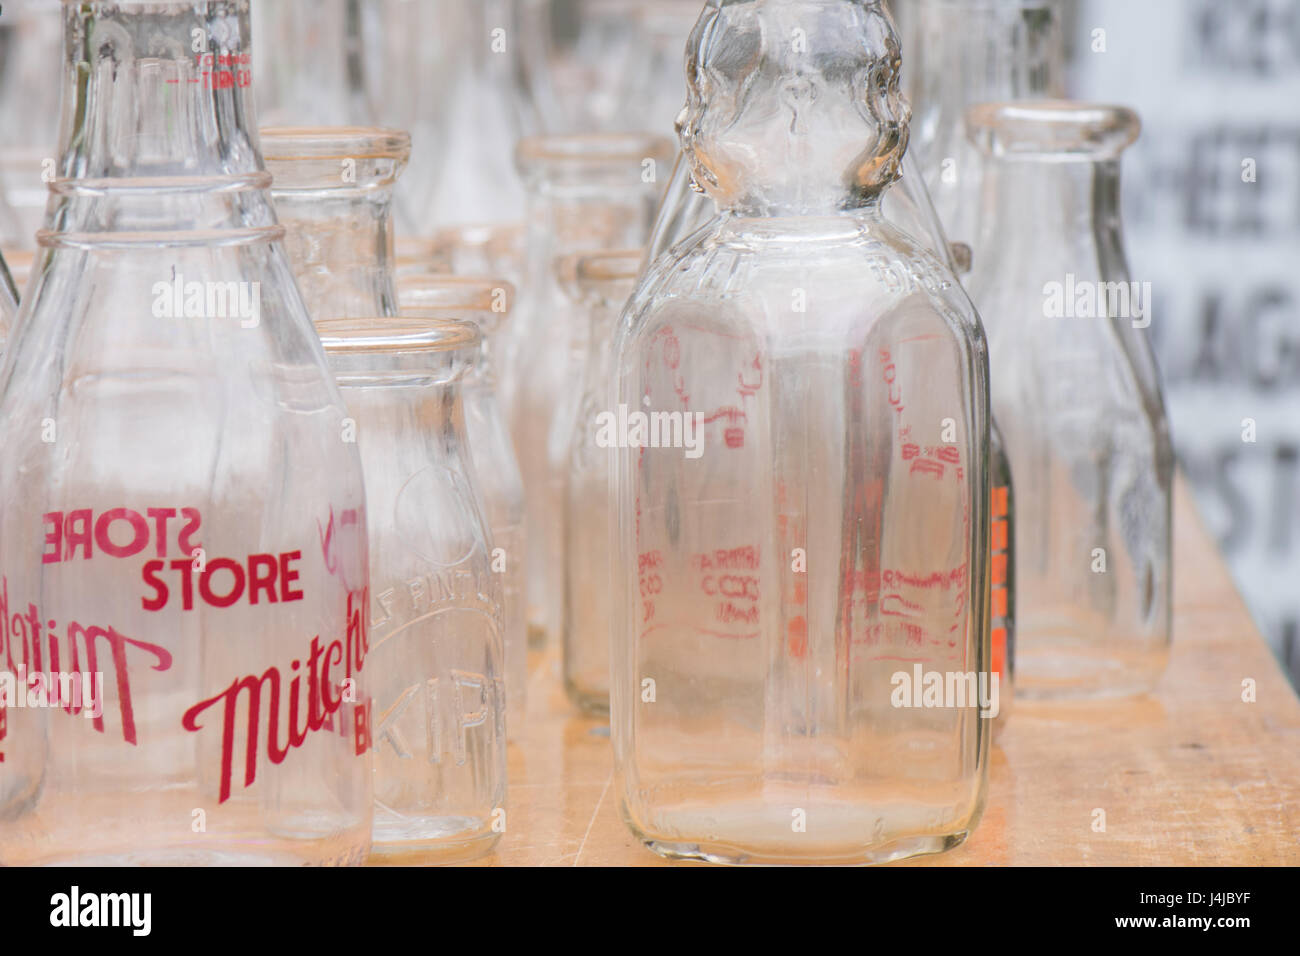 Looking through display of vintage milk bottles. Stock Photo